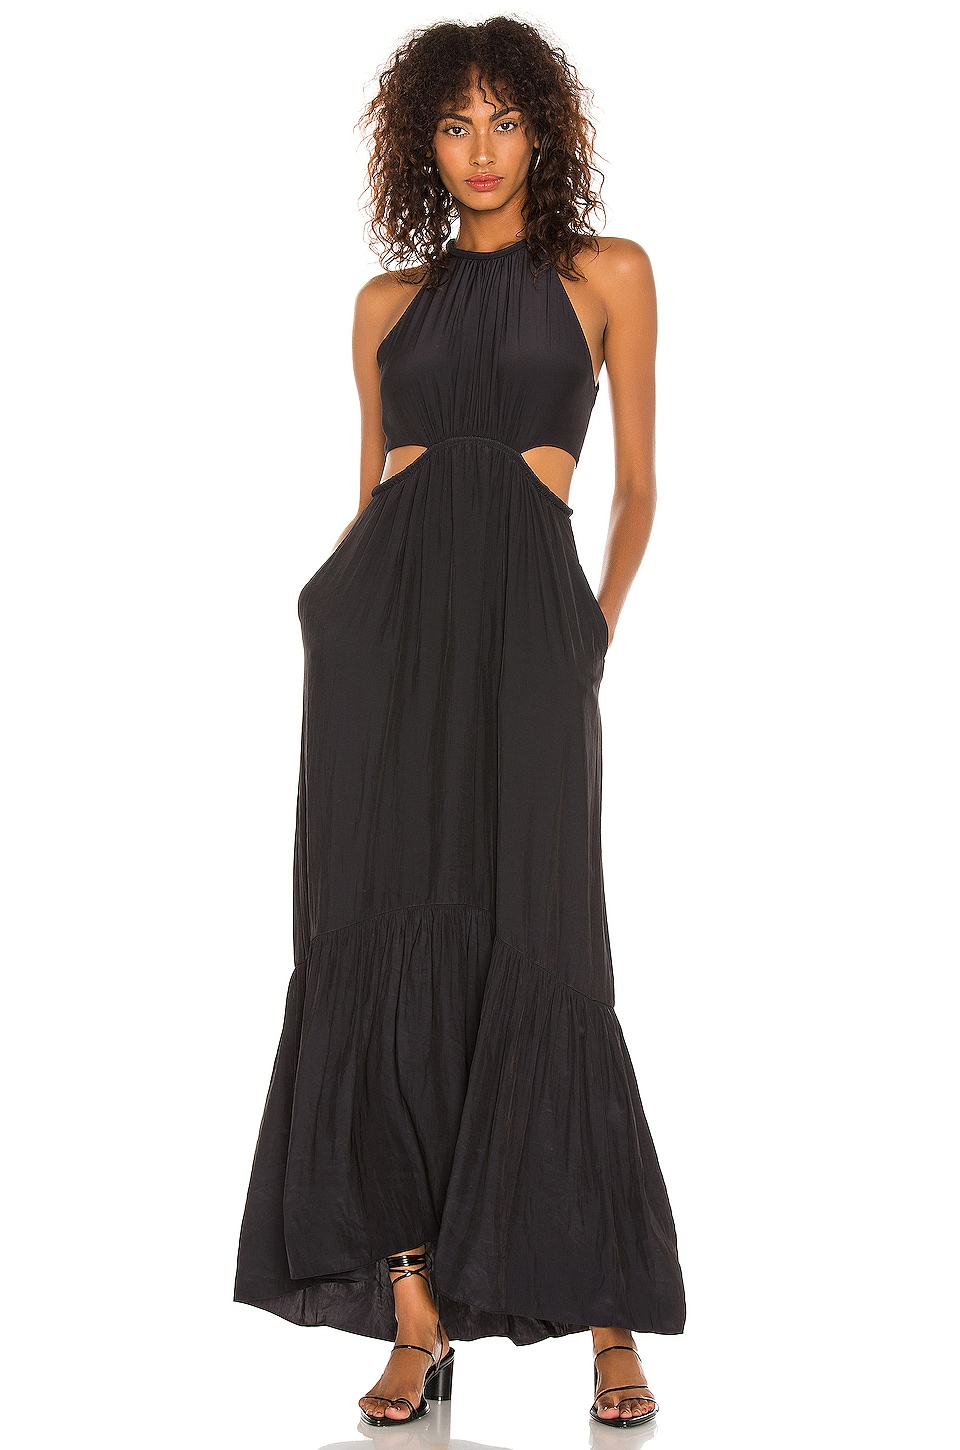 A.L.C. Libra Dress in Black | REVOLVE